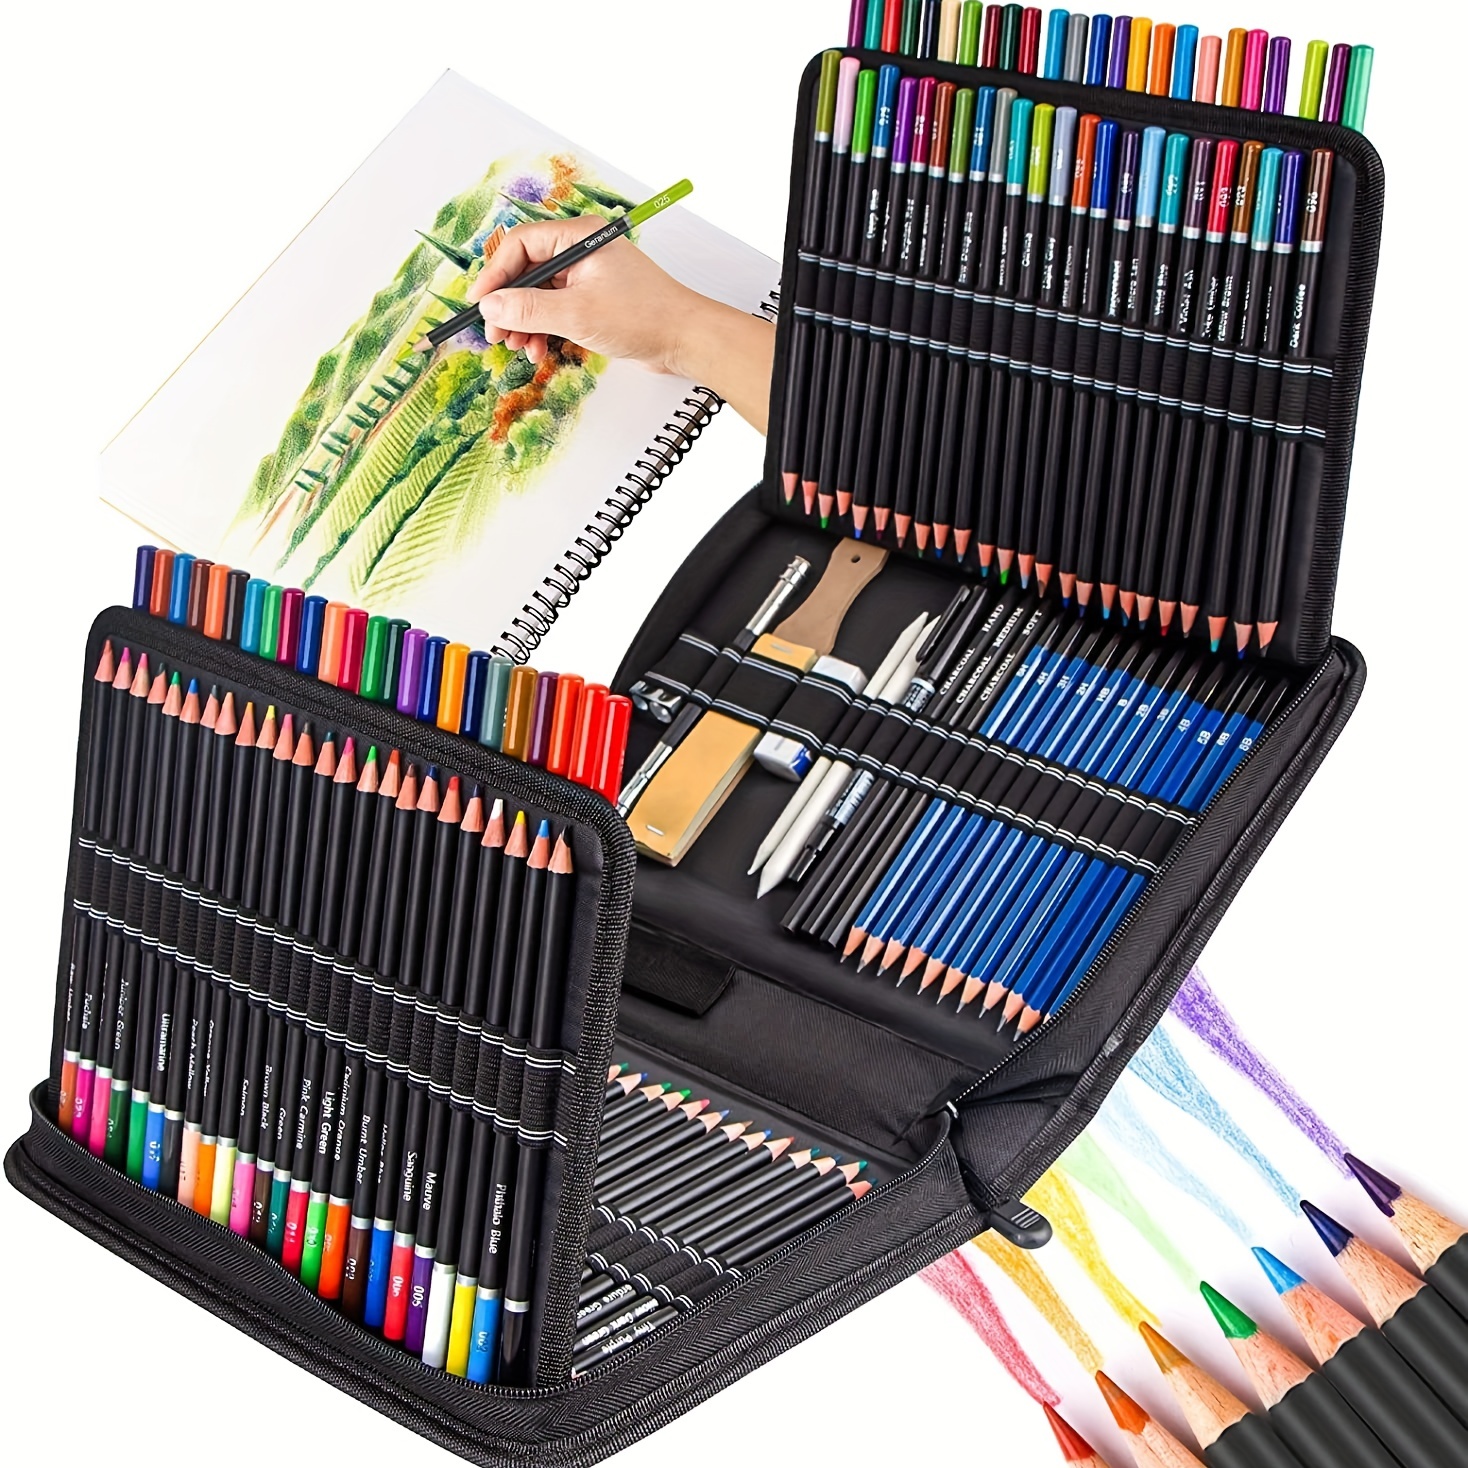  KJHG 144Pcs Sketching & Drawing Pencils Art Kit,Professional  Drawing Art Tool Kit CharcoalGraphiteWatercolorMetallicColored Drawing  Pencils Set for Artists,Beginners,Adults,Kids,Teens : Arts, Crafts & Sewing